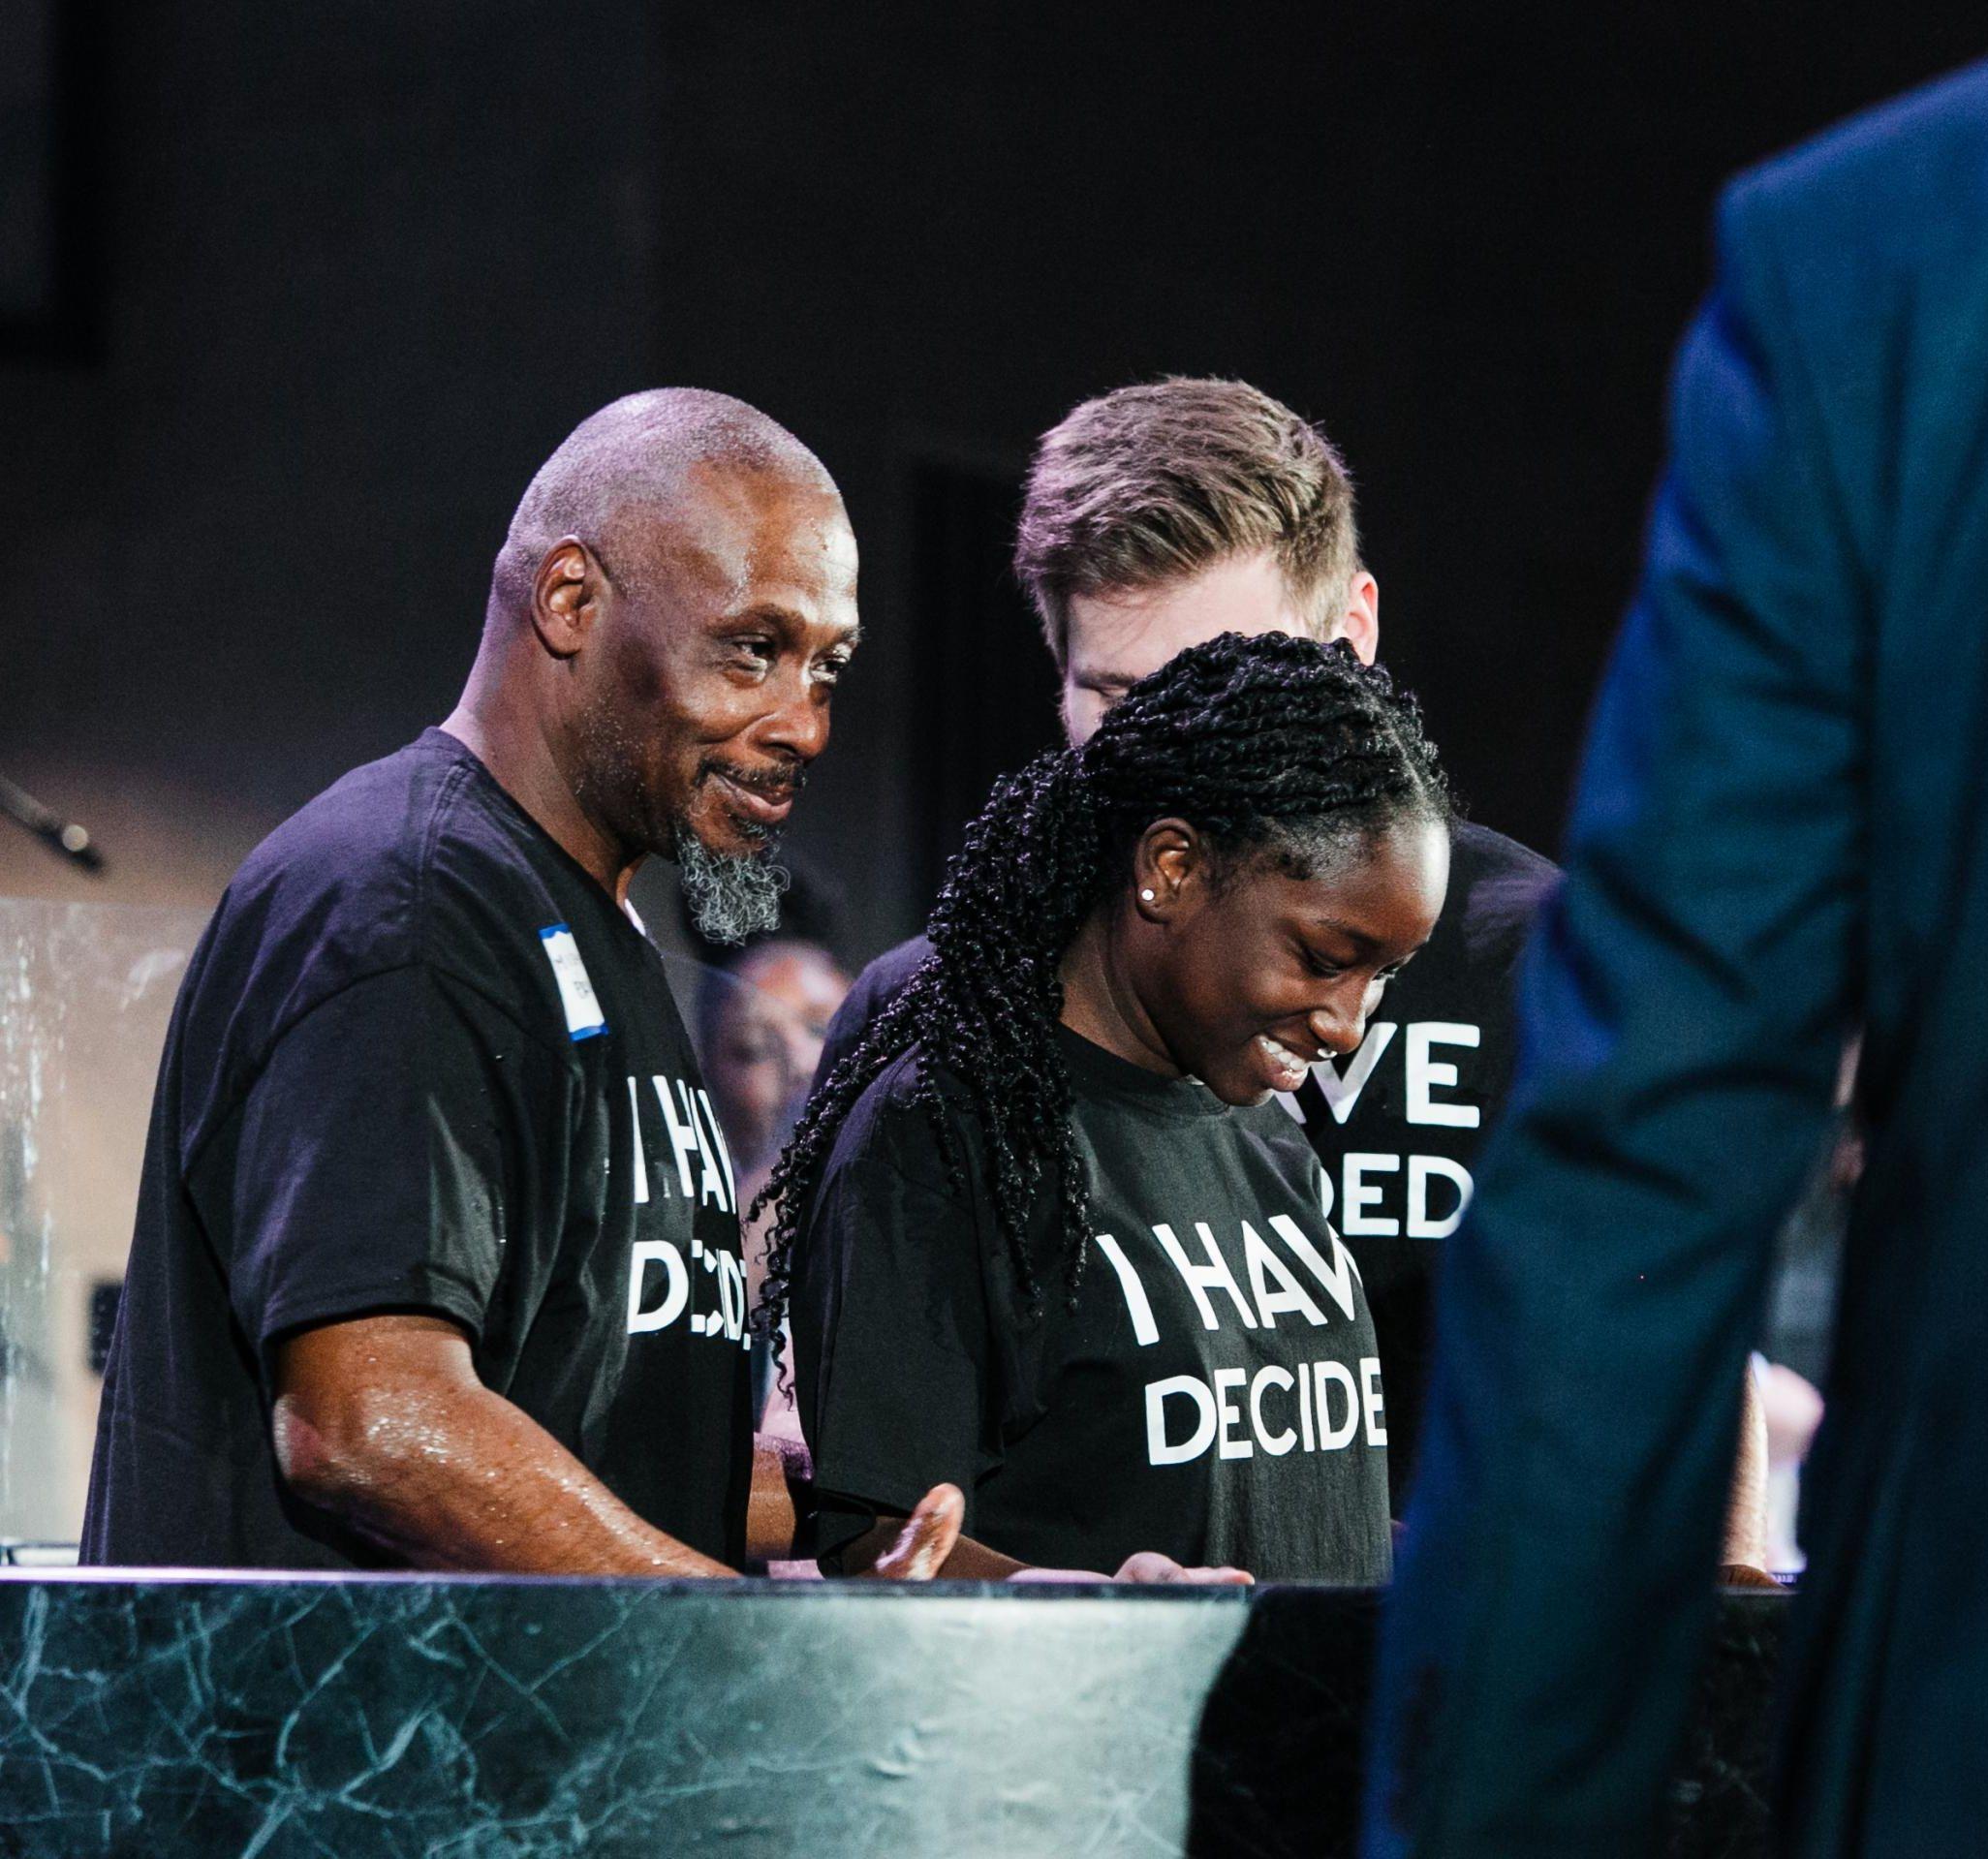 A woman getting baptized